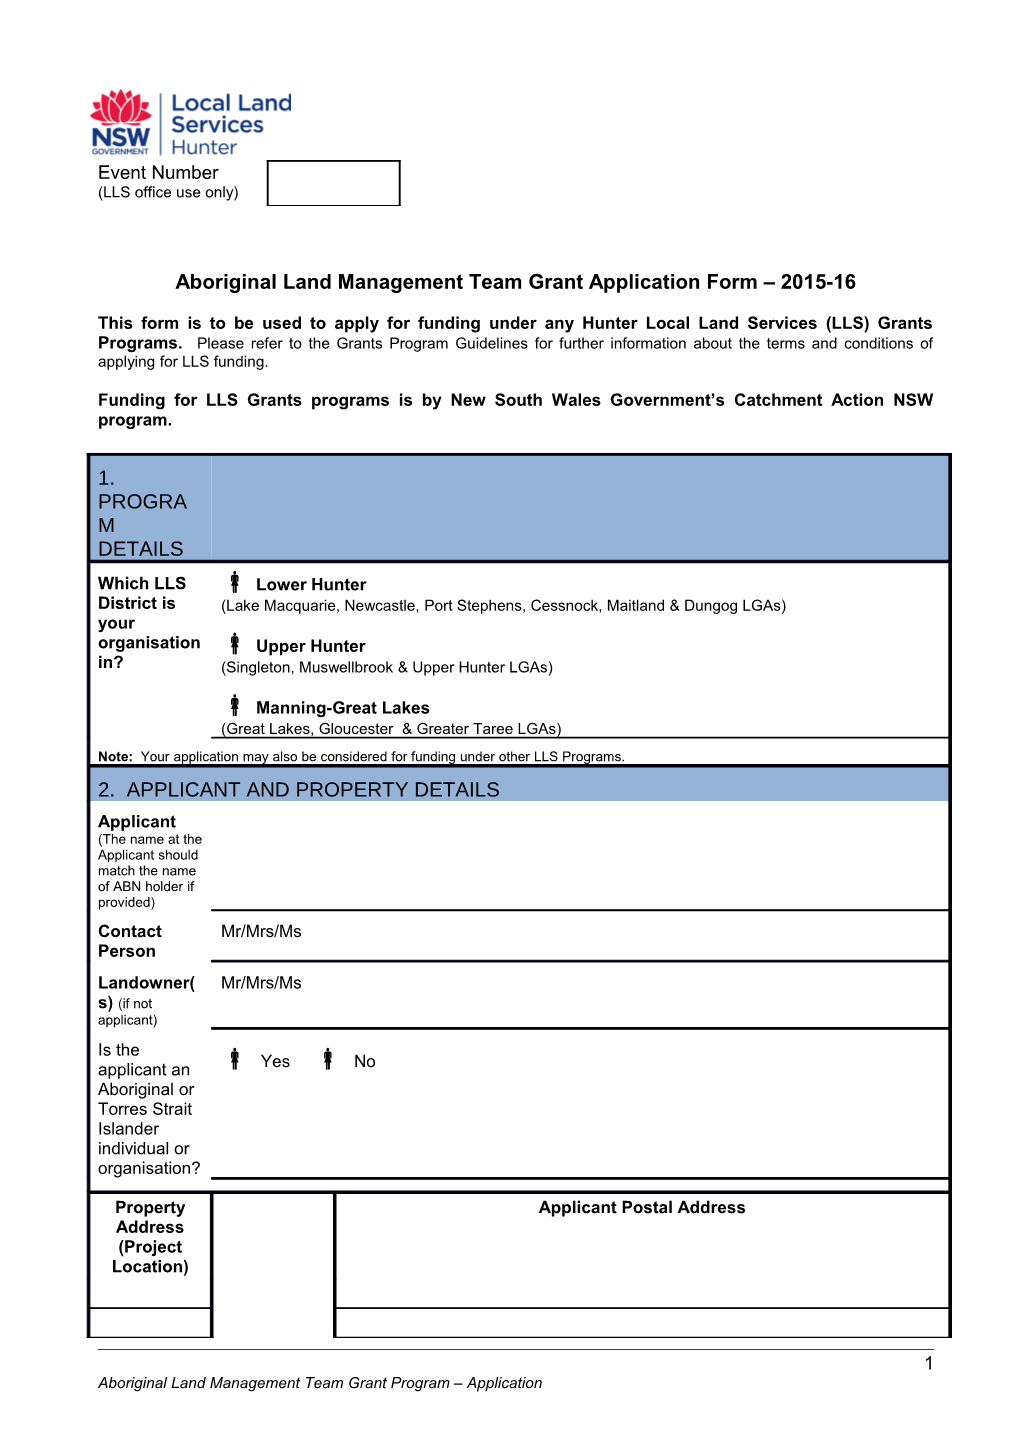 Aboriginal Land Management Team Grant Application Form 2015-16